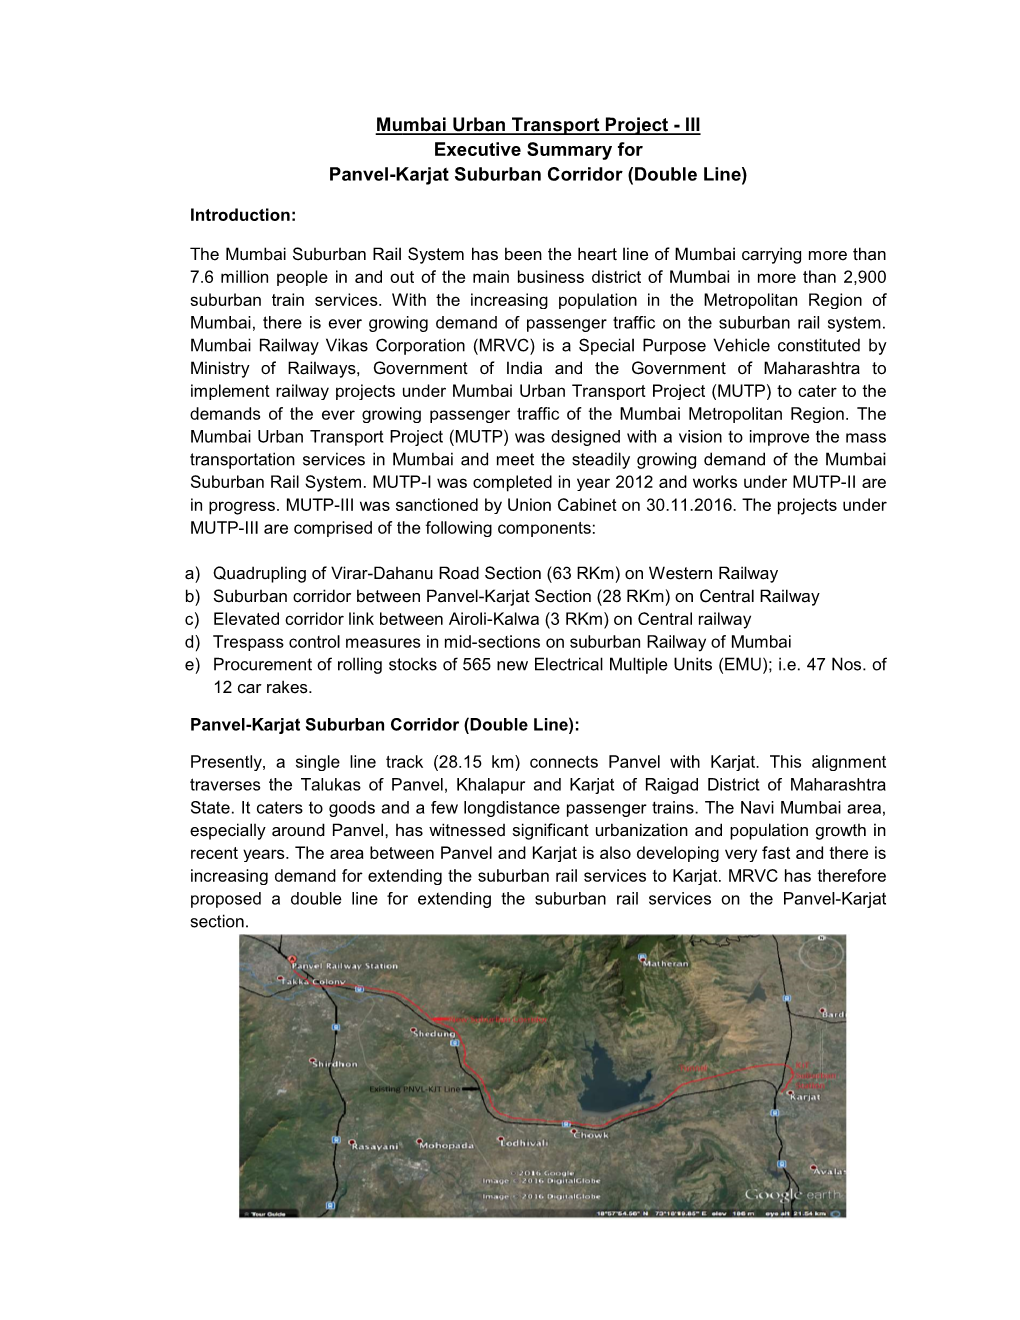 III Executive Summary for Karjat Suburban Corridor (Double Line)